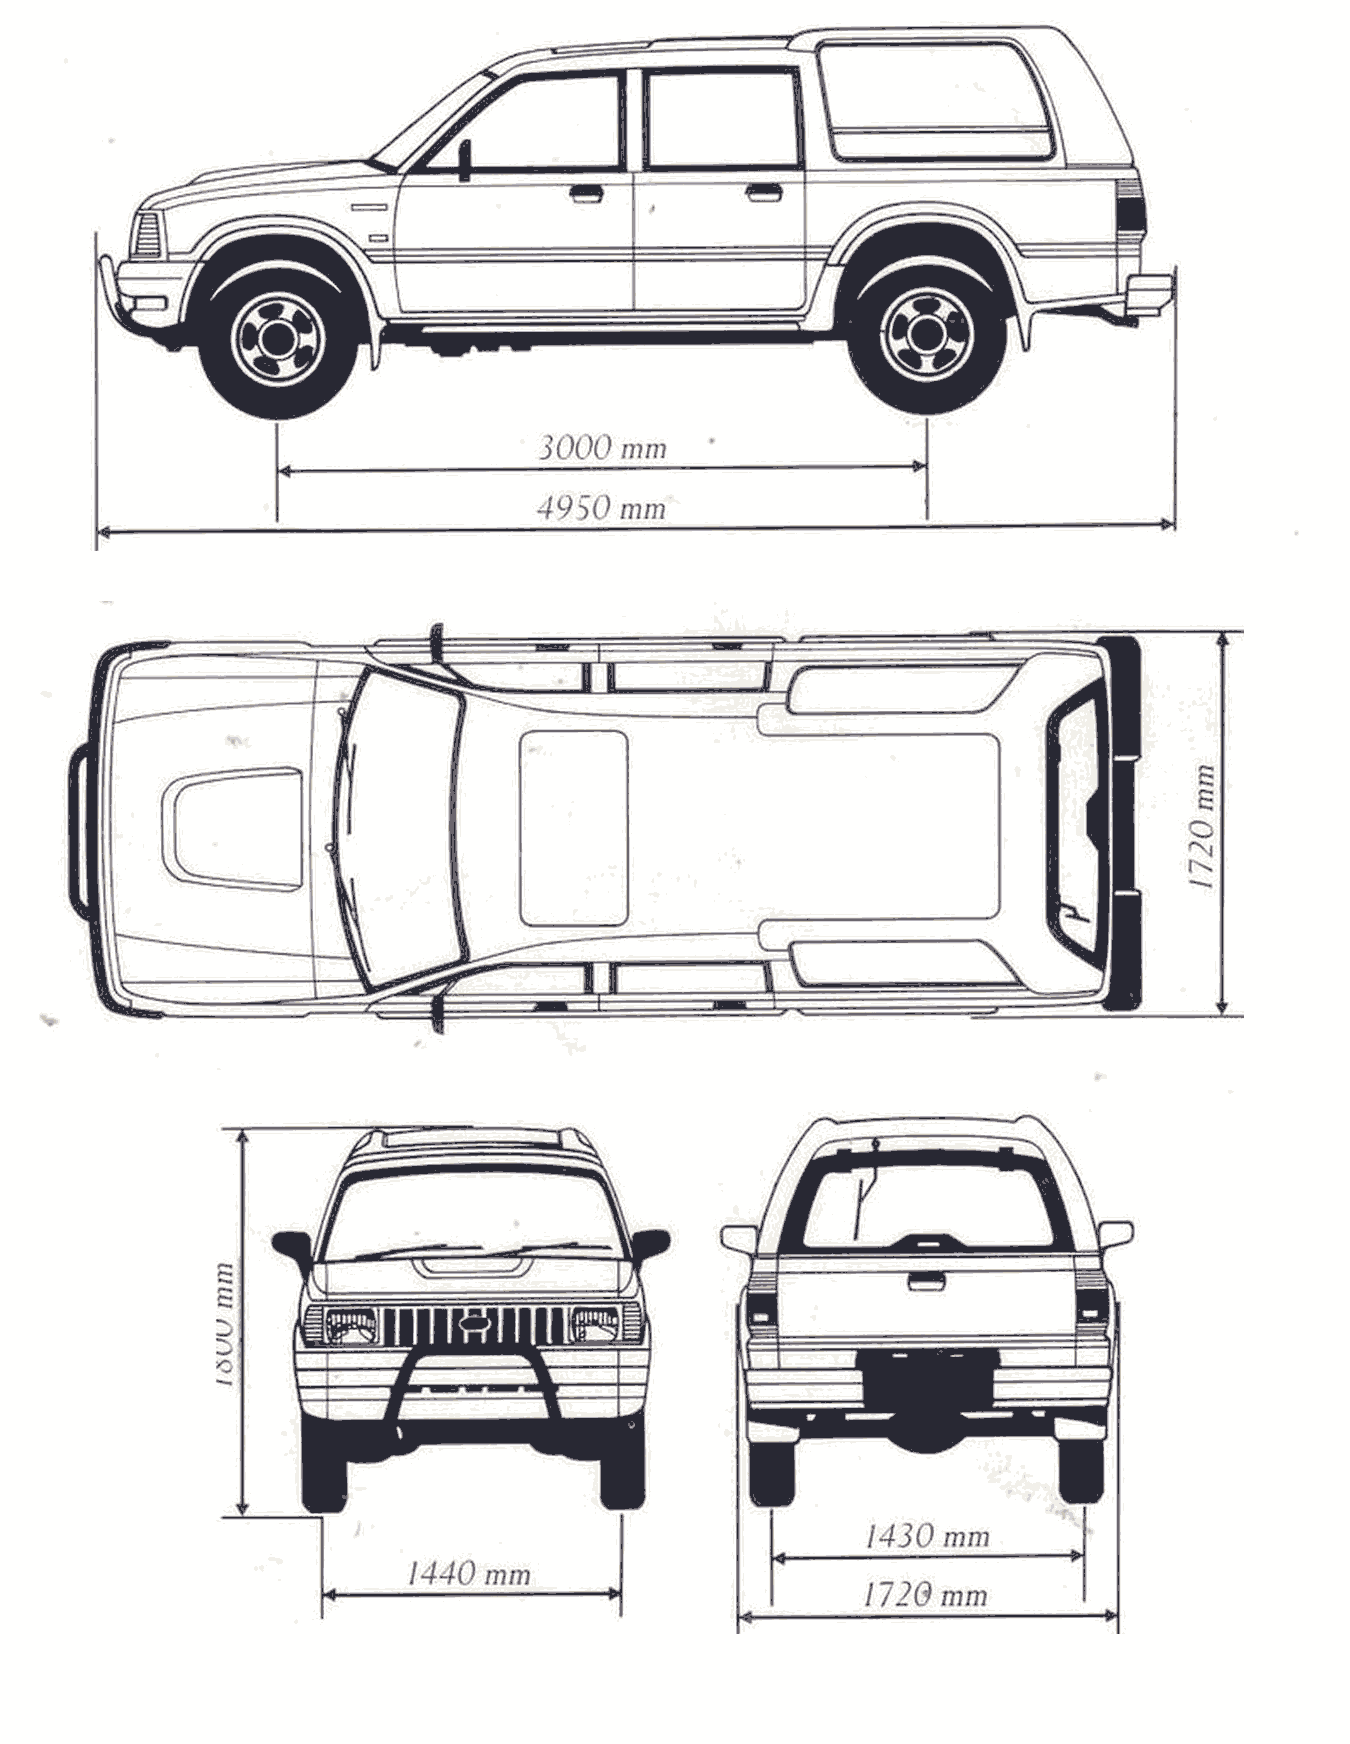 Ford Raider blueprint